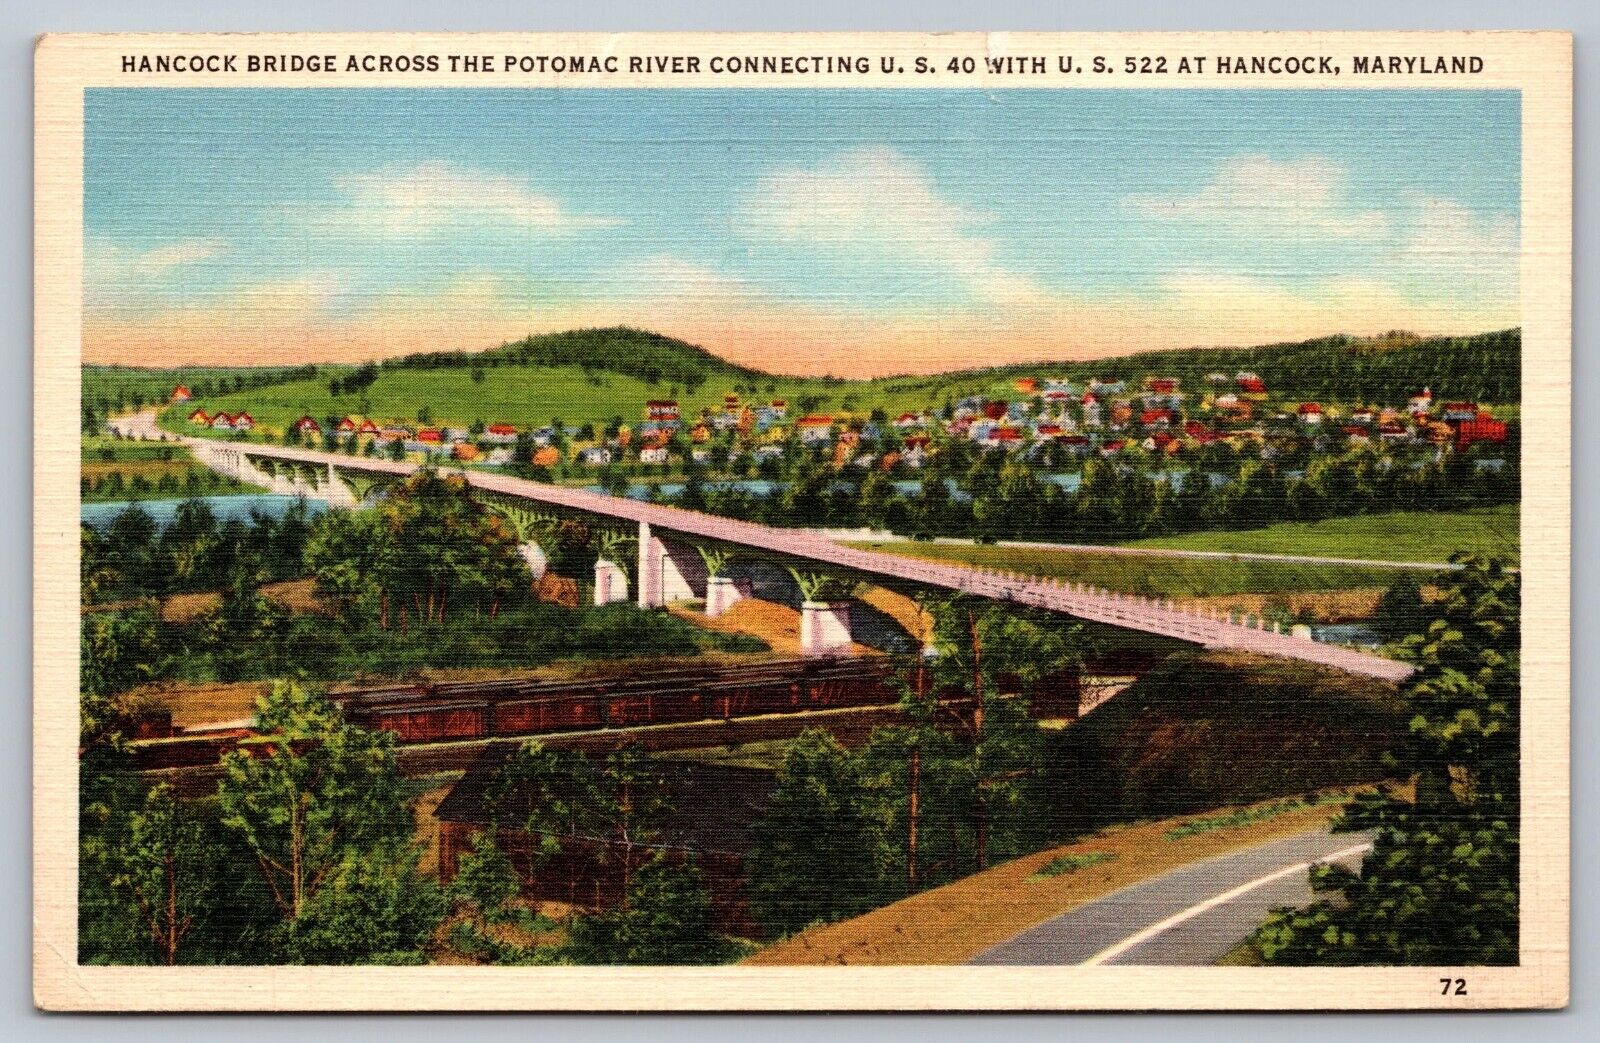 Hancock MD - Hancock Bridge - Potomac River - Train - Posted 1944